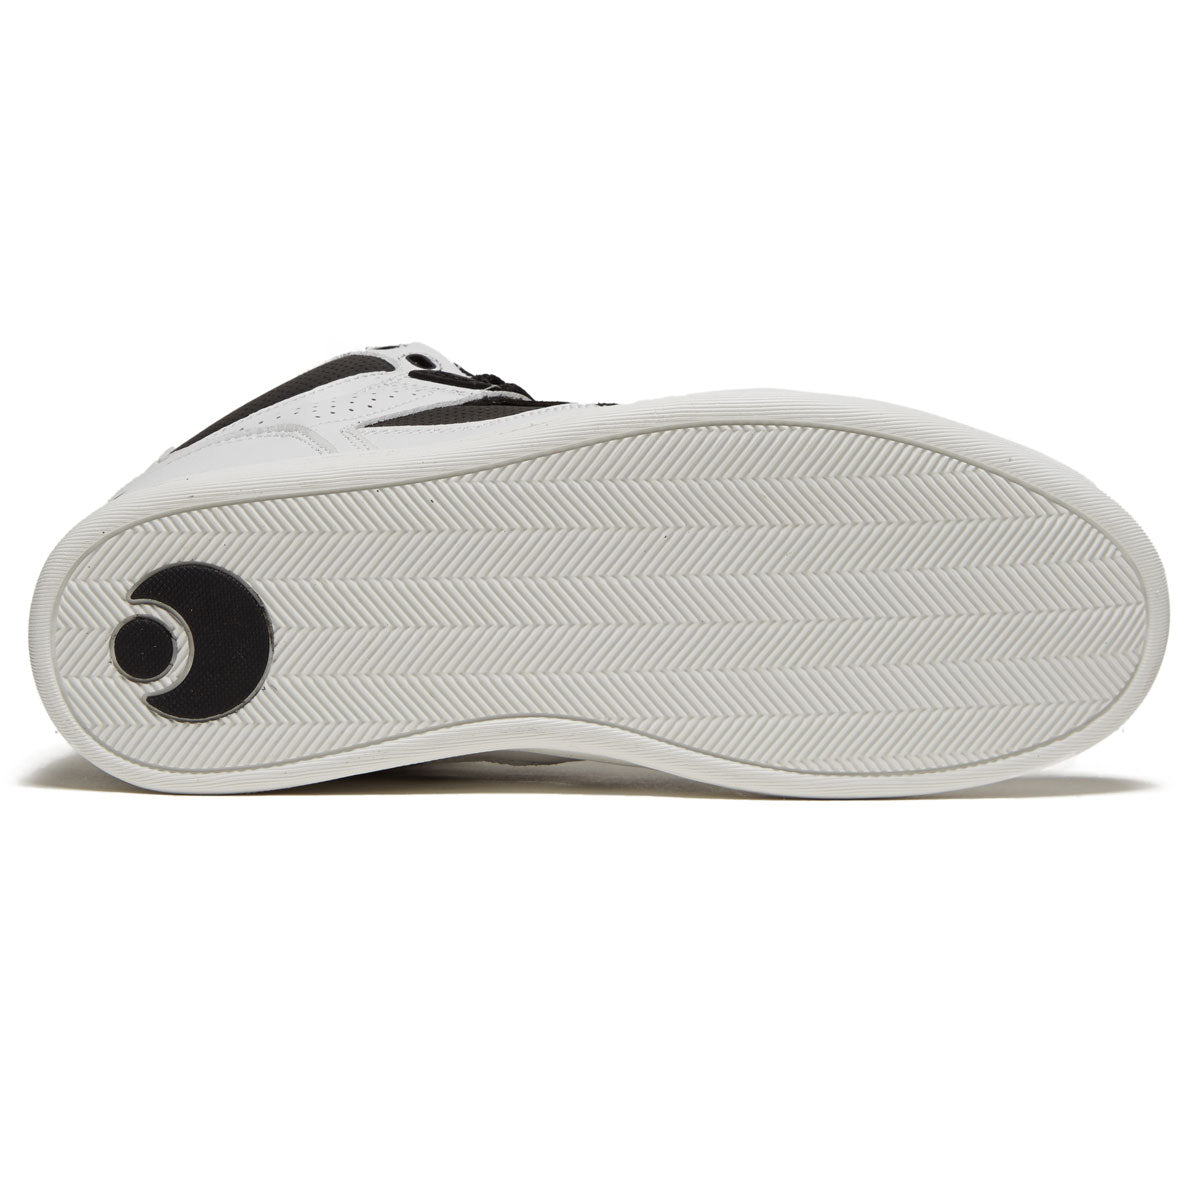 Osiris Nyc 83 Clk Shoes - White/Black image 4